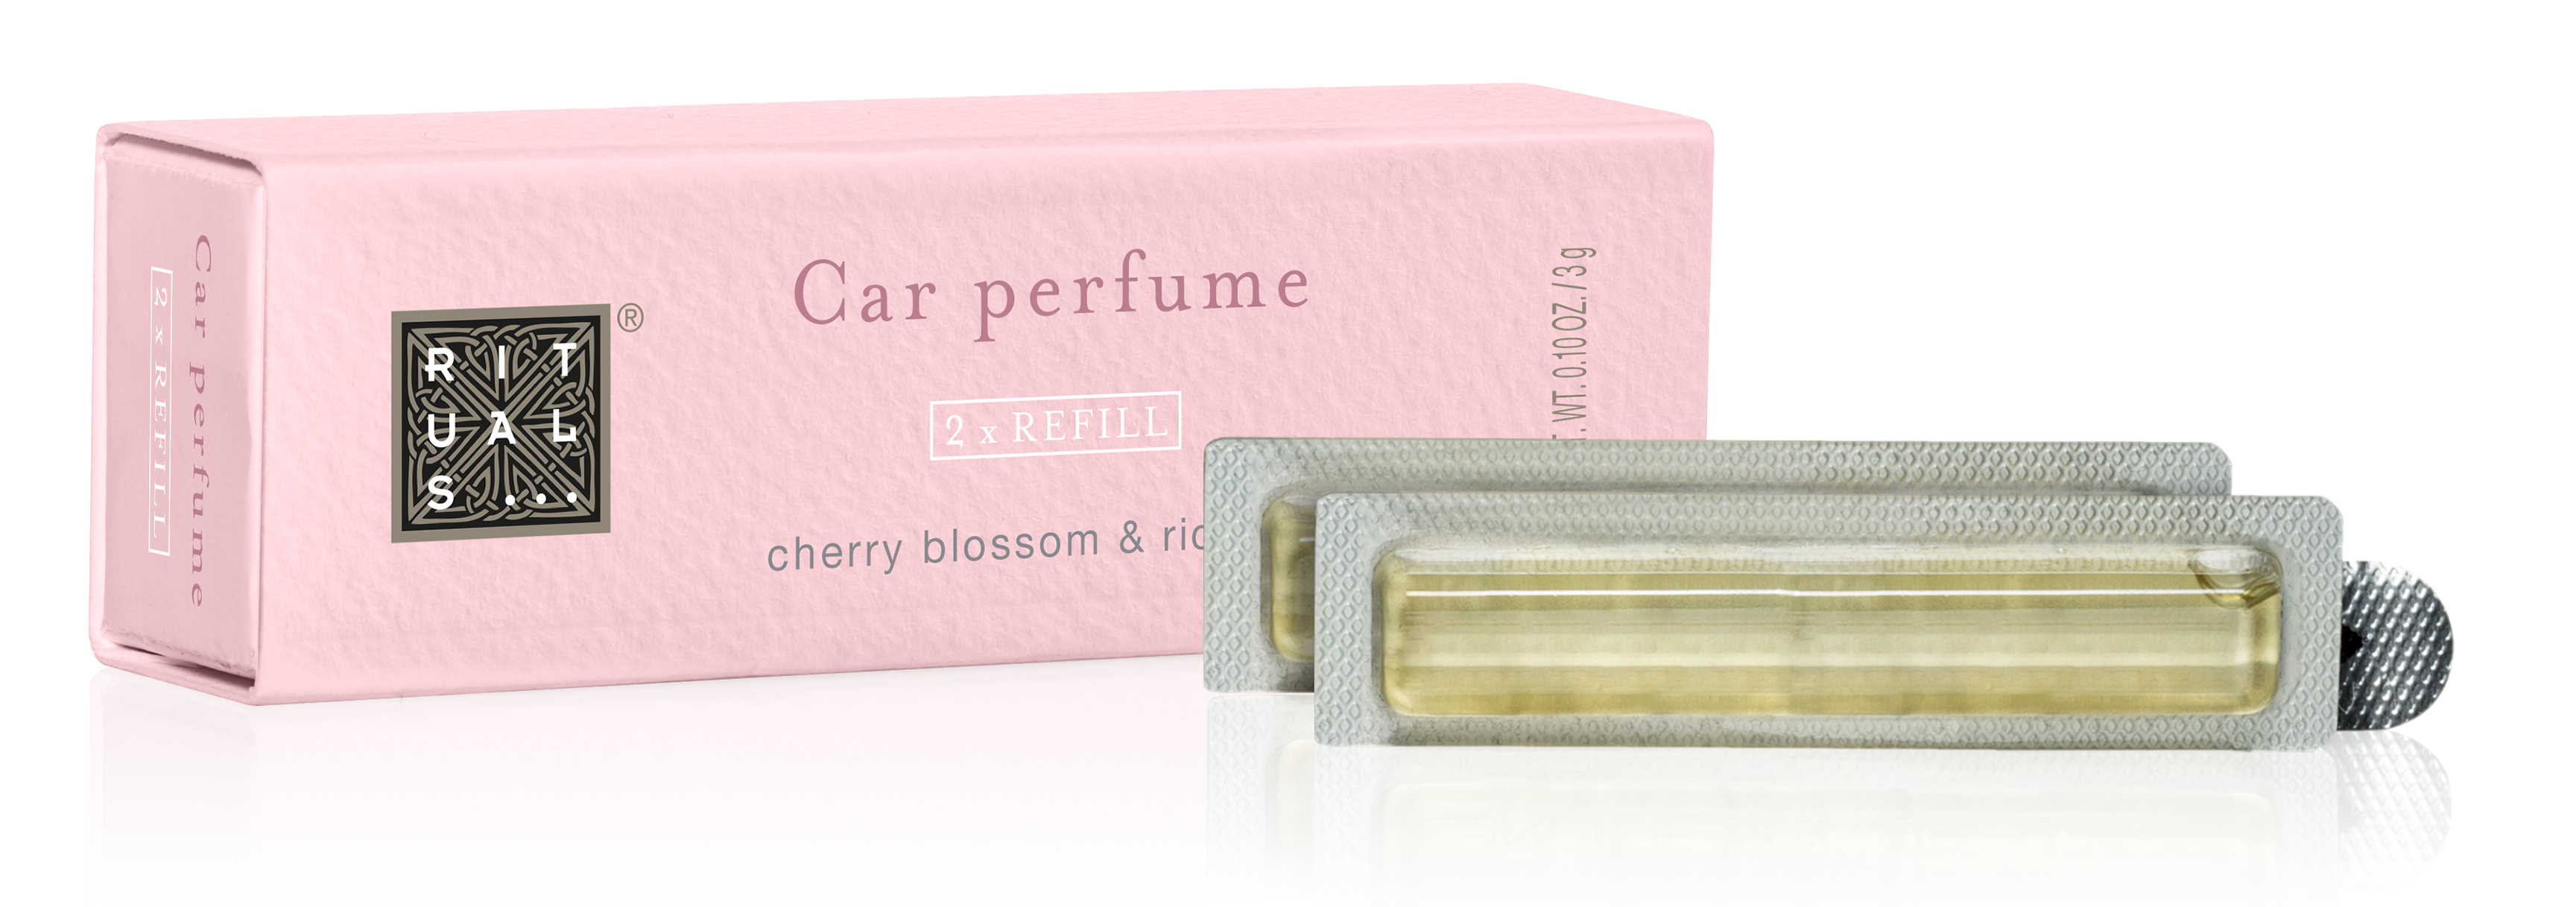 THE RITUAL OF KARMA life is a journey refill car perfume Manual Rituals -  Perfumes Club